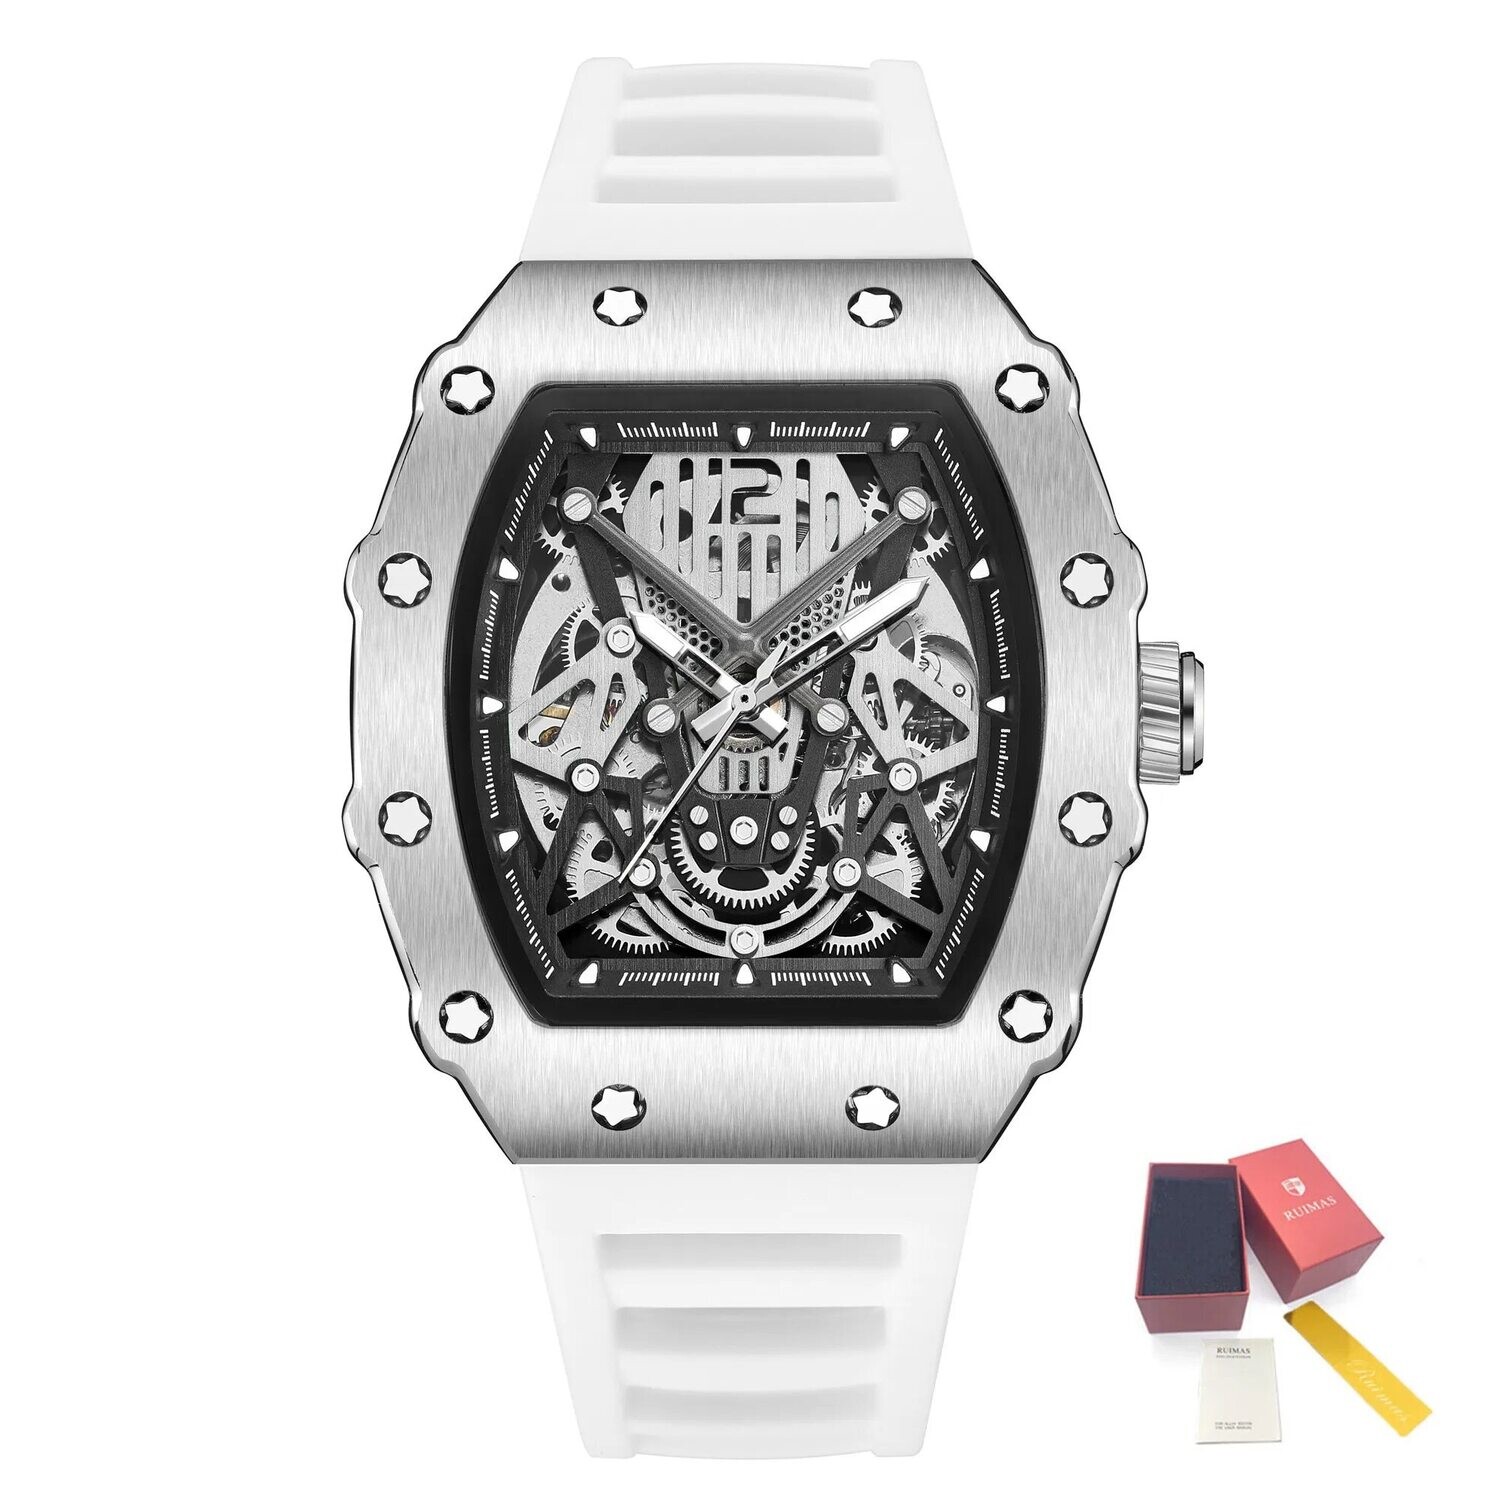 RUIMAS Luxury Watch Men Fashion Automatic Mechanical Watches Clock Silicone Strap Sport Casual Wristwatch Big Dial Reloj Hombre